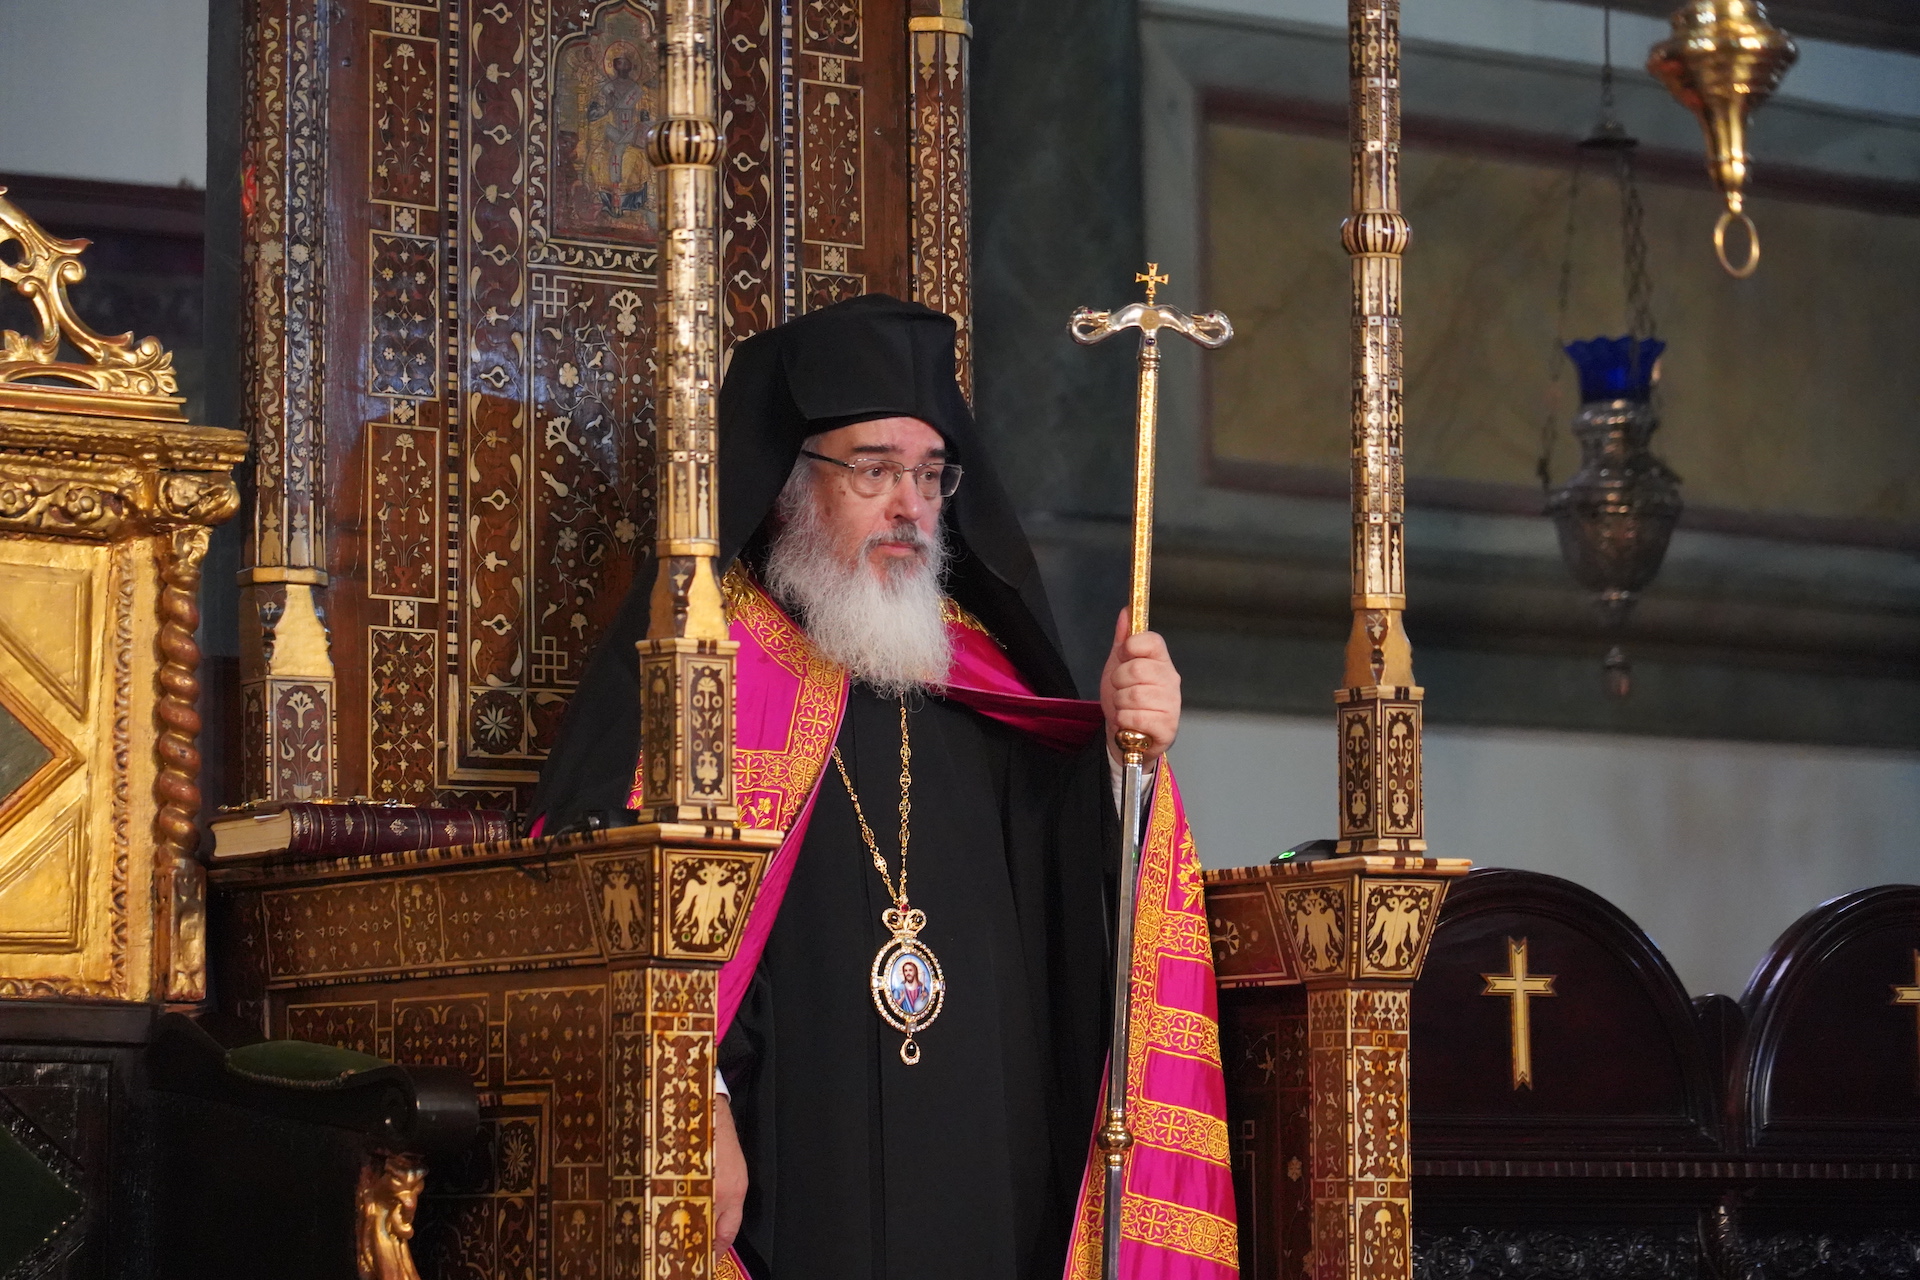 Metropolitan Chrysostomos of Nikopolis and Preveza officiates at the sacred Patriarchal Church